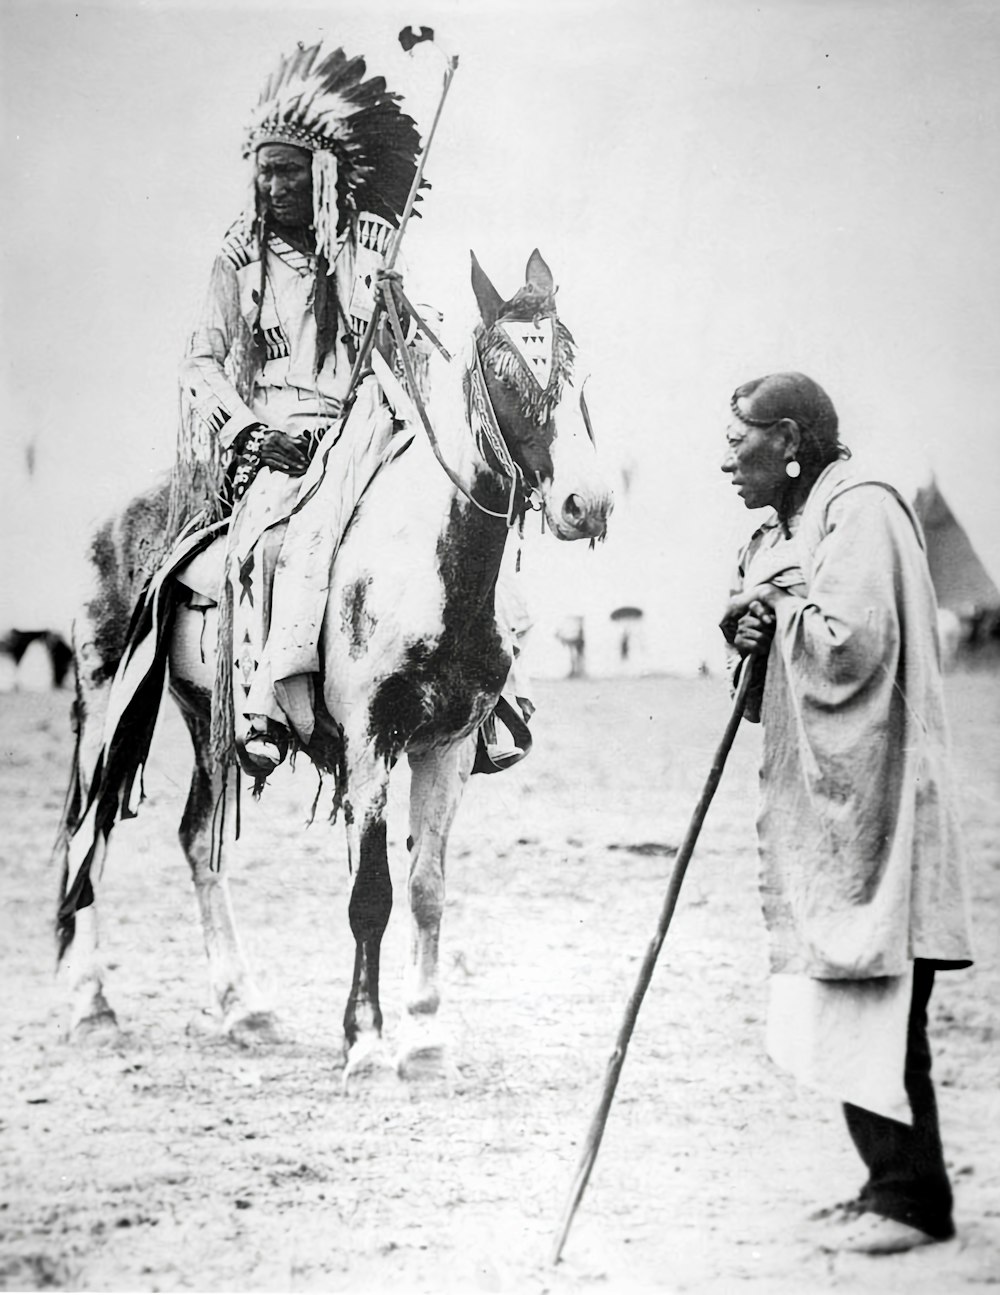 a man standing next to a man on a horse